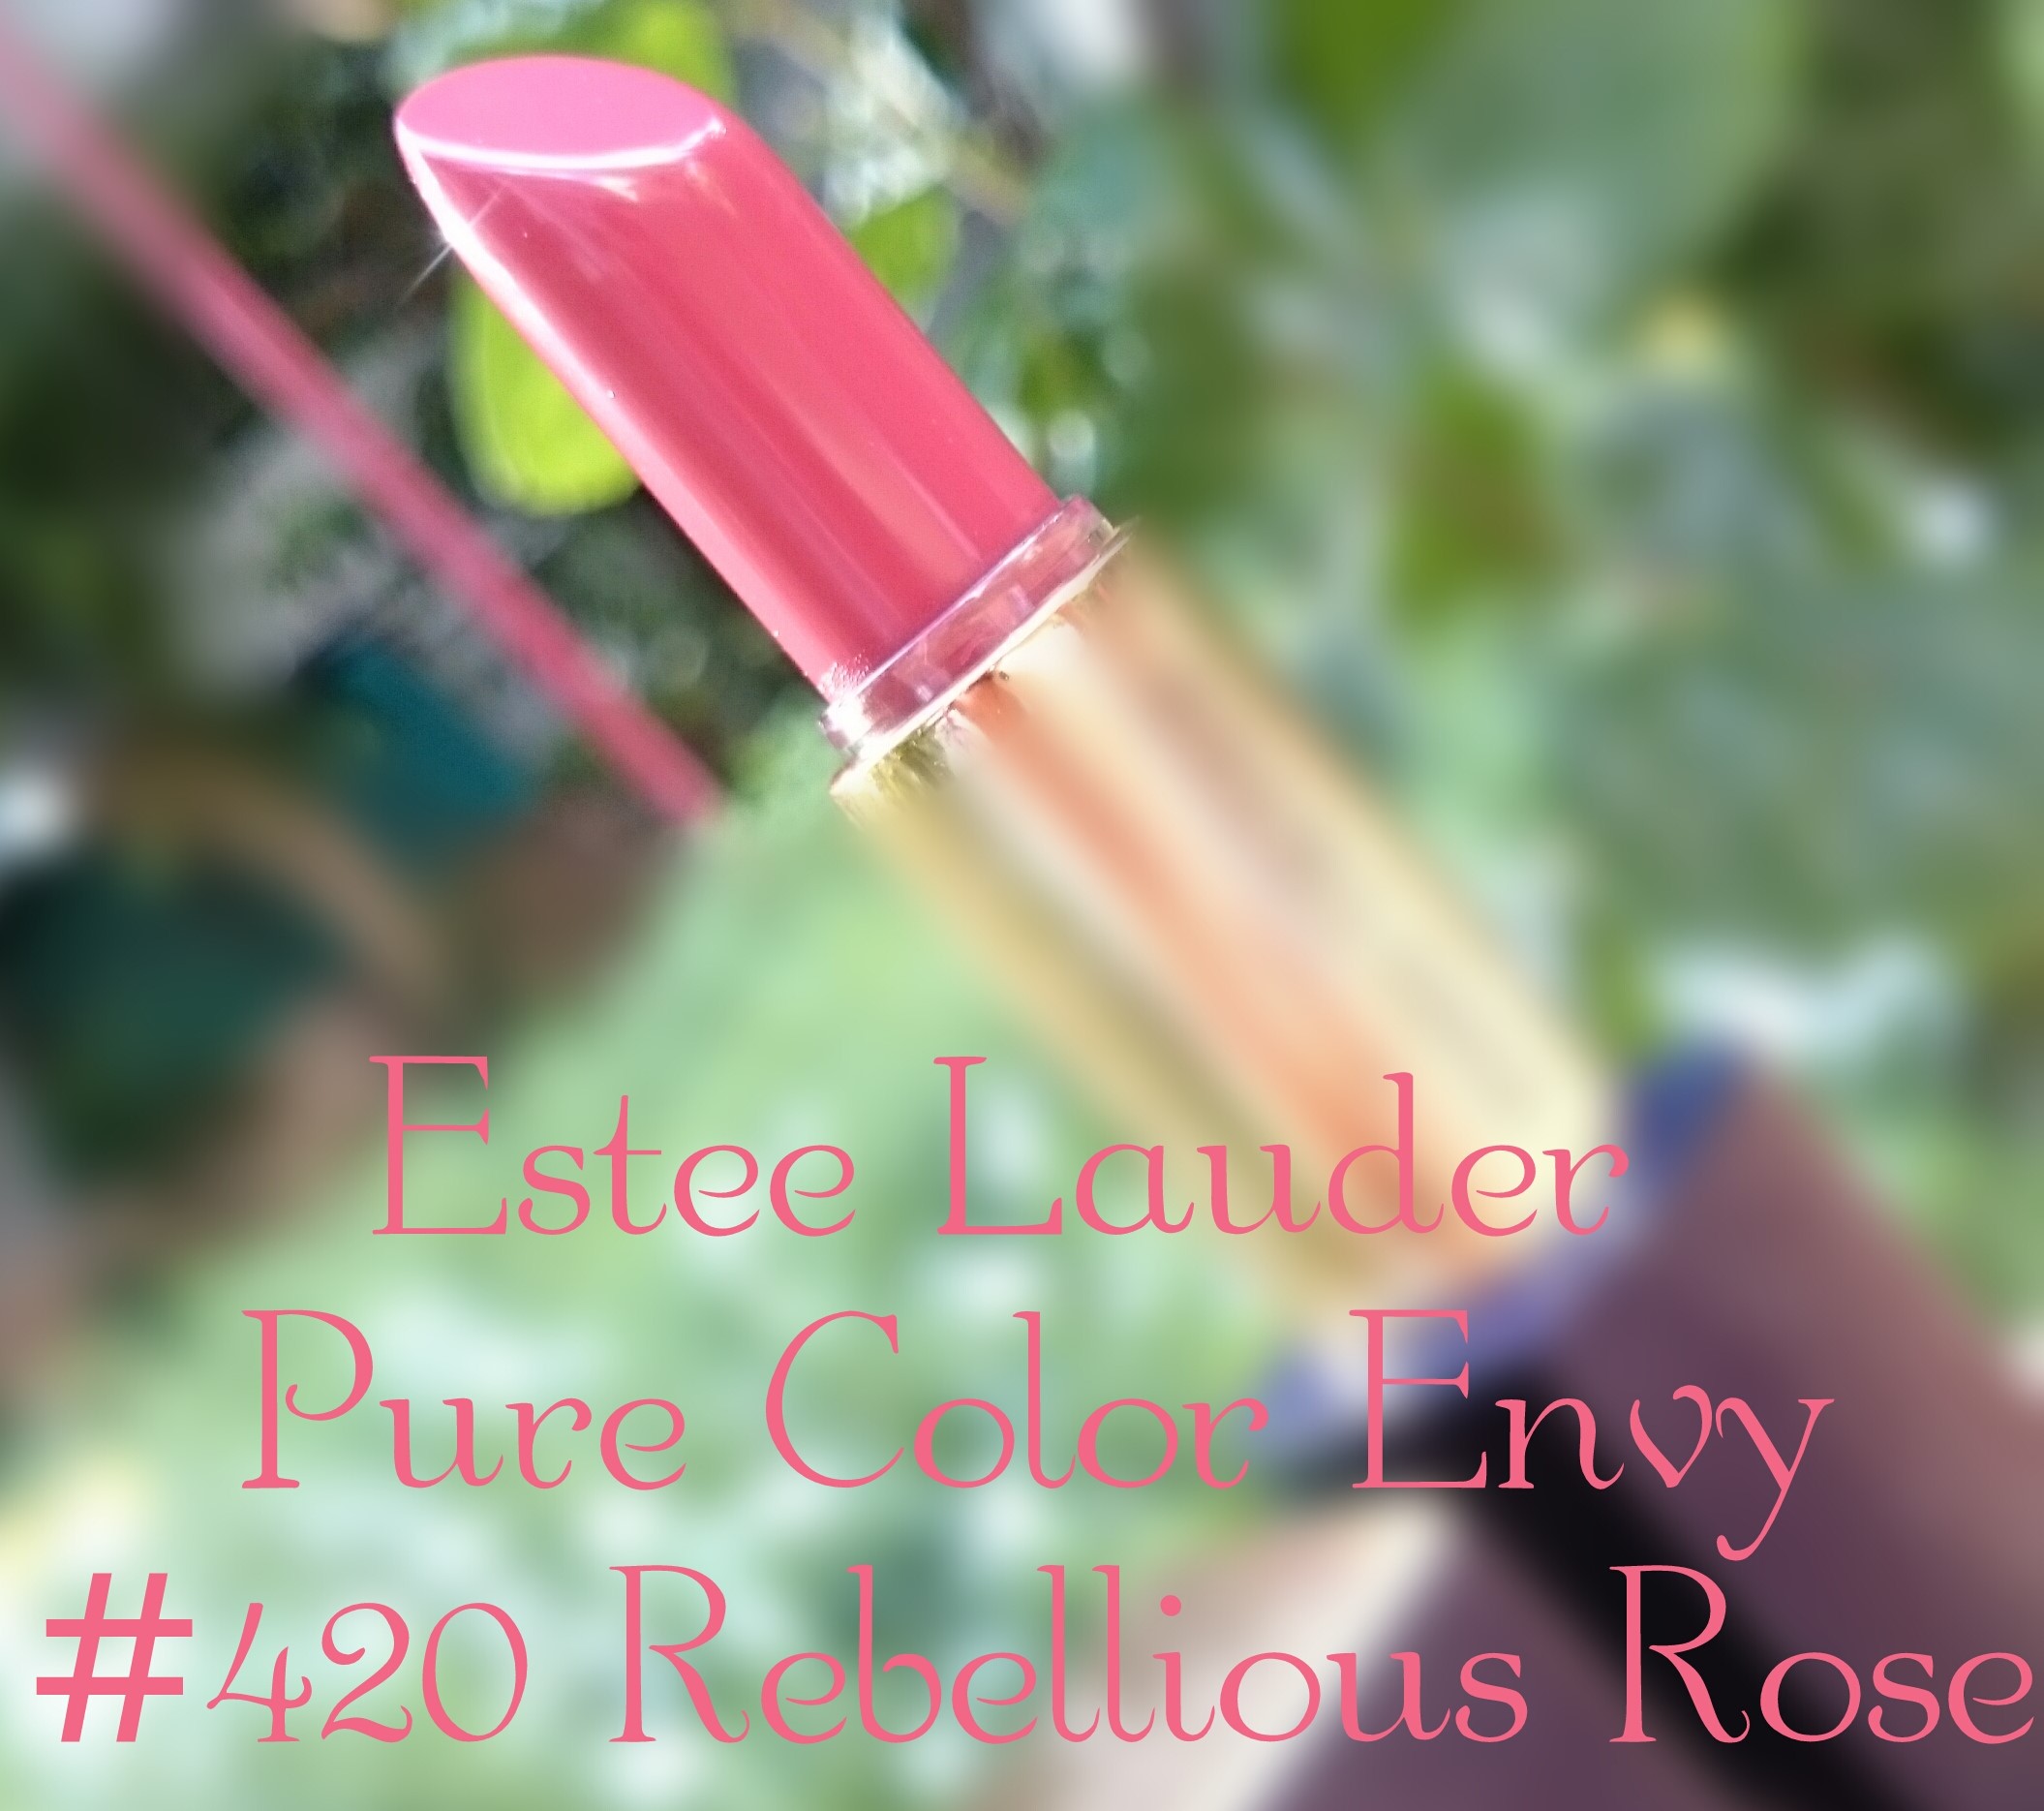 Estee Lauder Pure Color Envy lipstick in Rebellious Rose